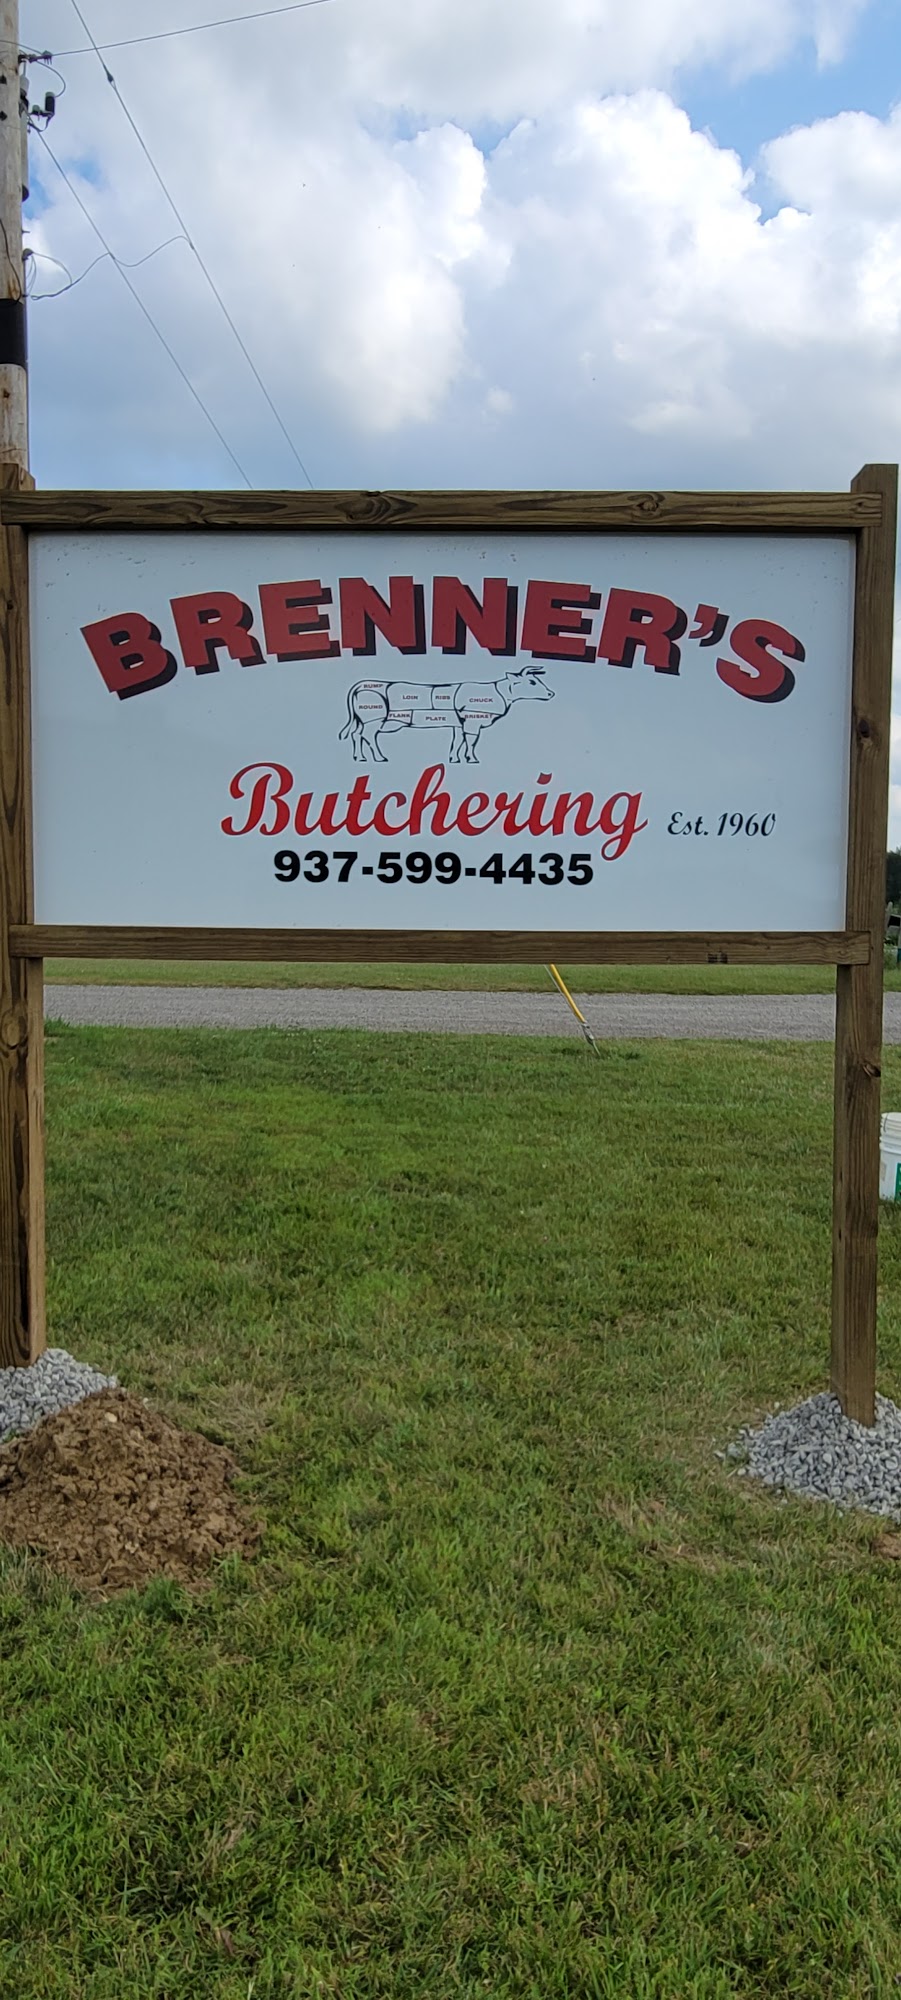 Brenner's Butchering